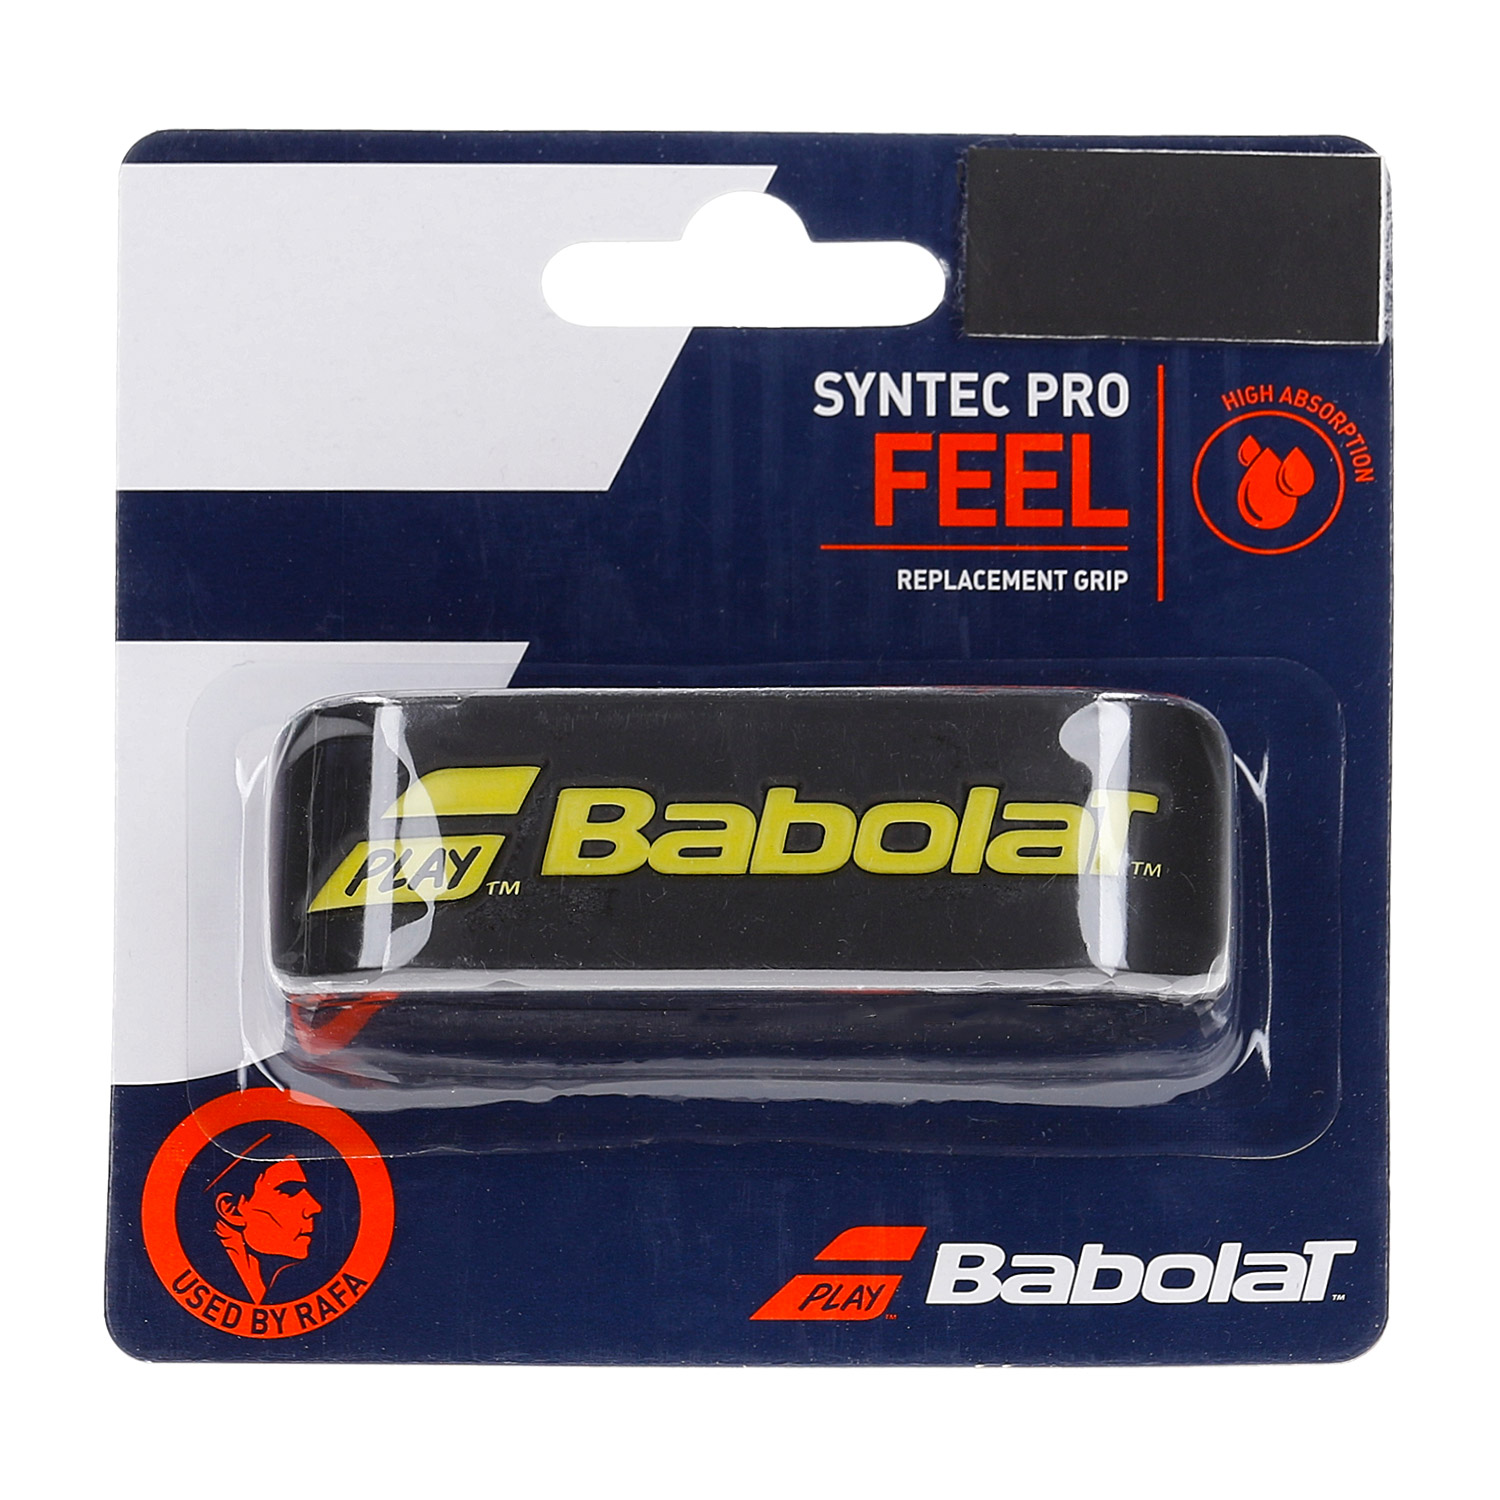 Babolat Syntec Pro Grip tennis colore nero-giallo super assorbente in offerta 